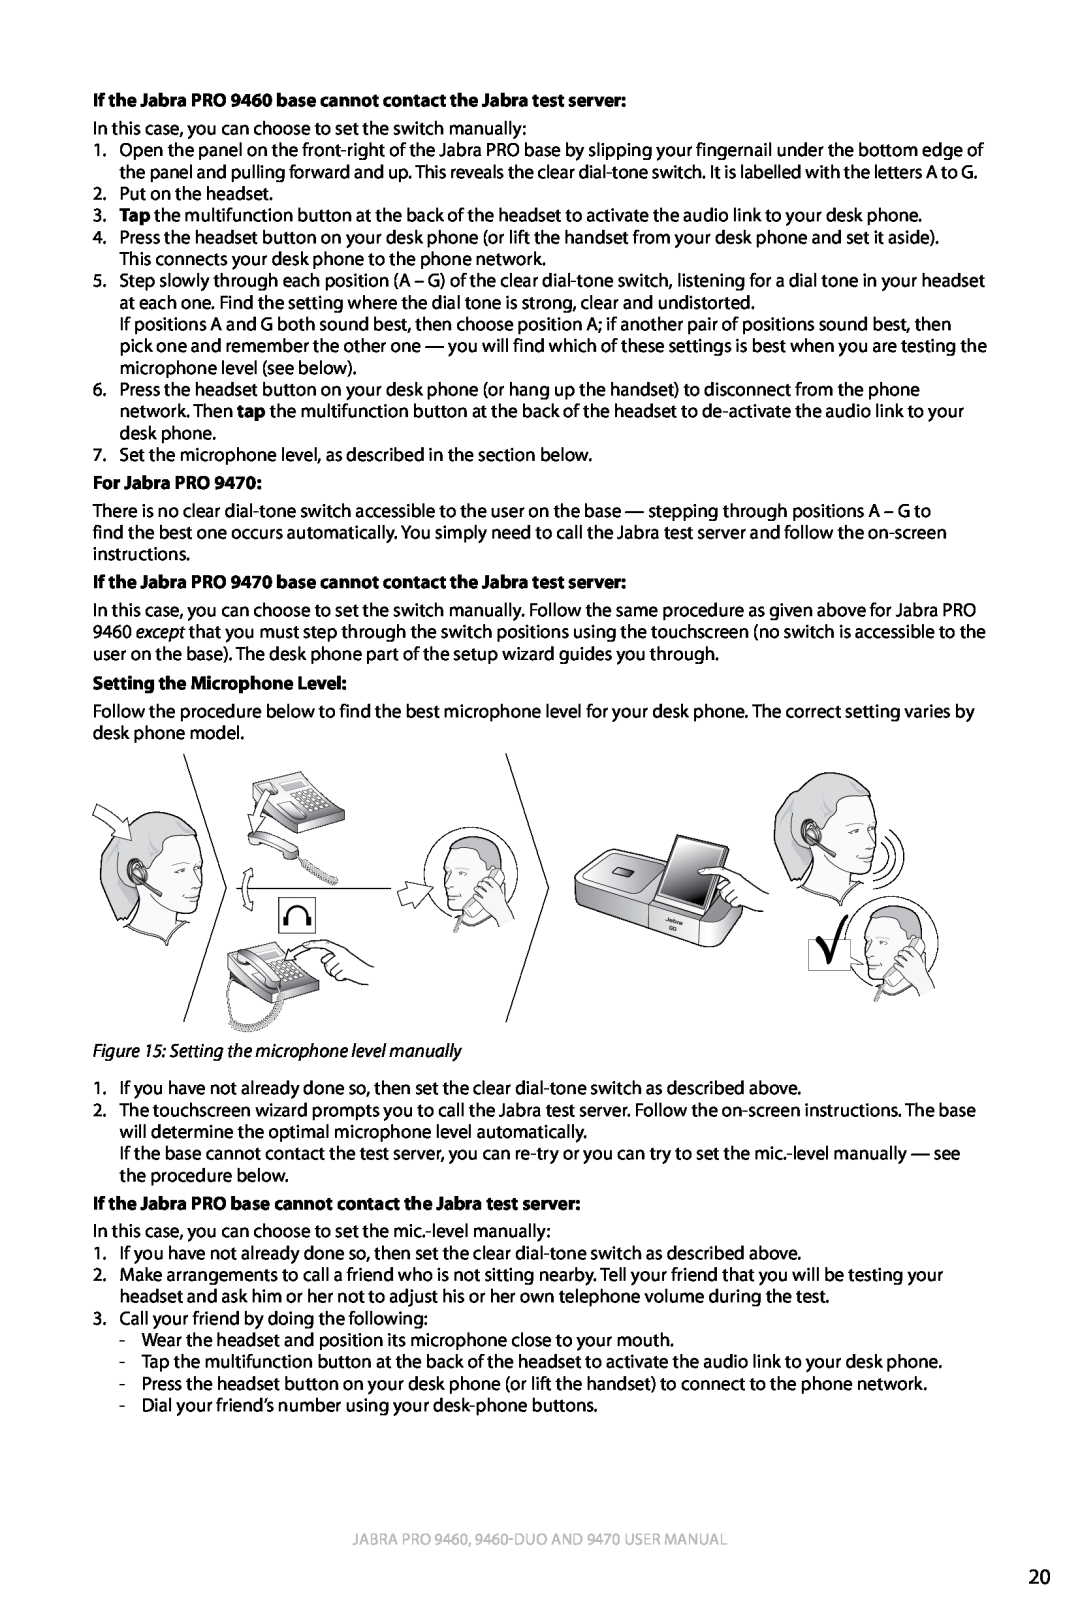 Lennox Hearth 9470 user manual english, For Jabra PRO 